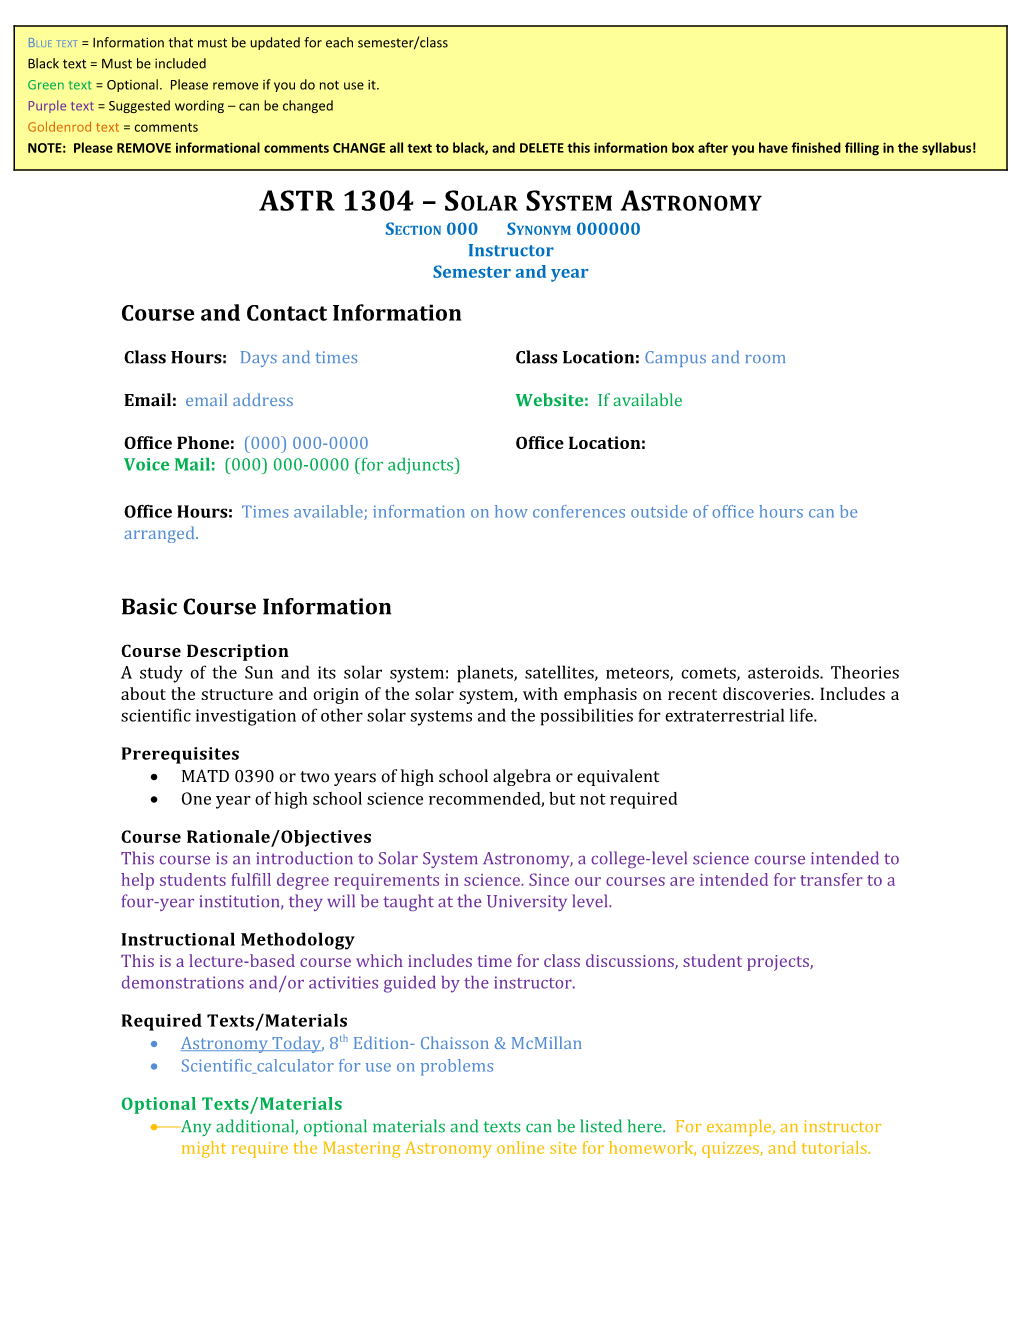 ASTR 1304 Solar System Astronomy